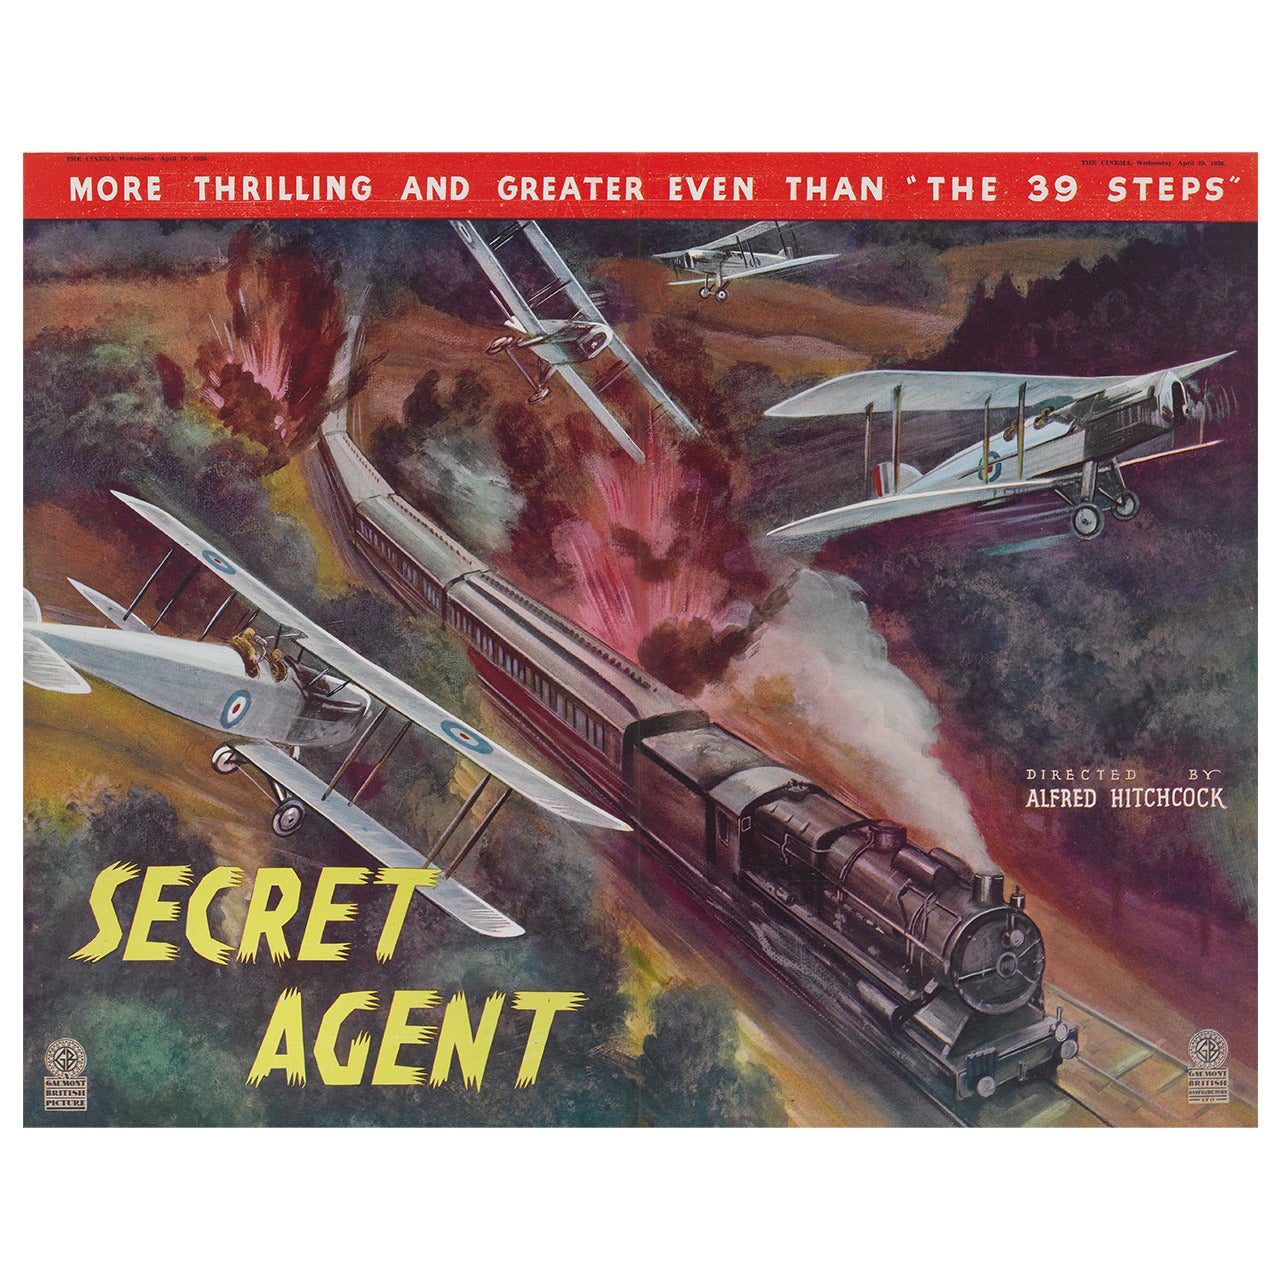 Originales britisches Werbeplakat „“ Secret Agent“